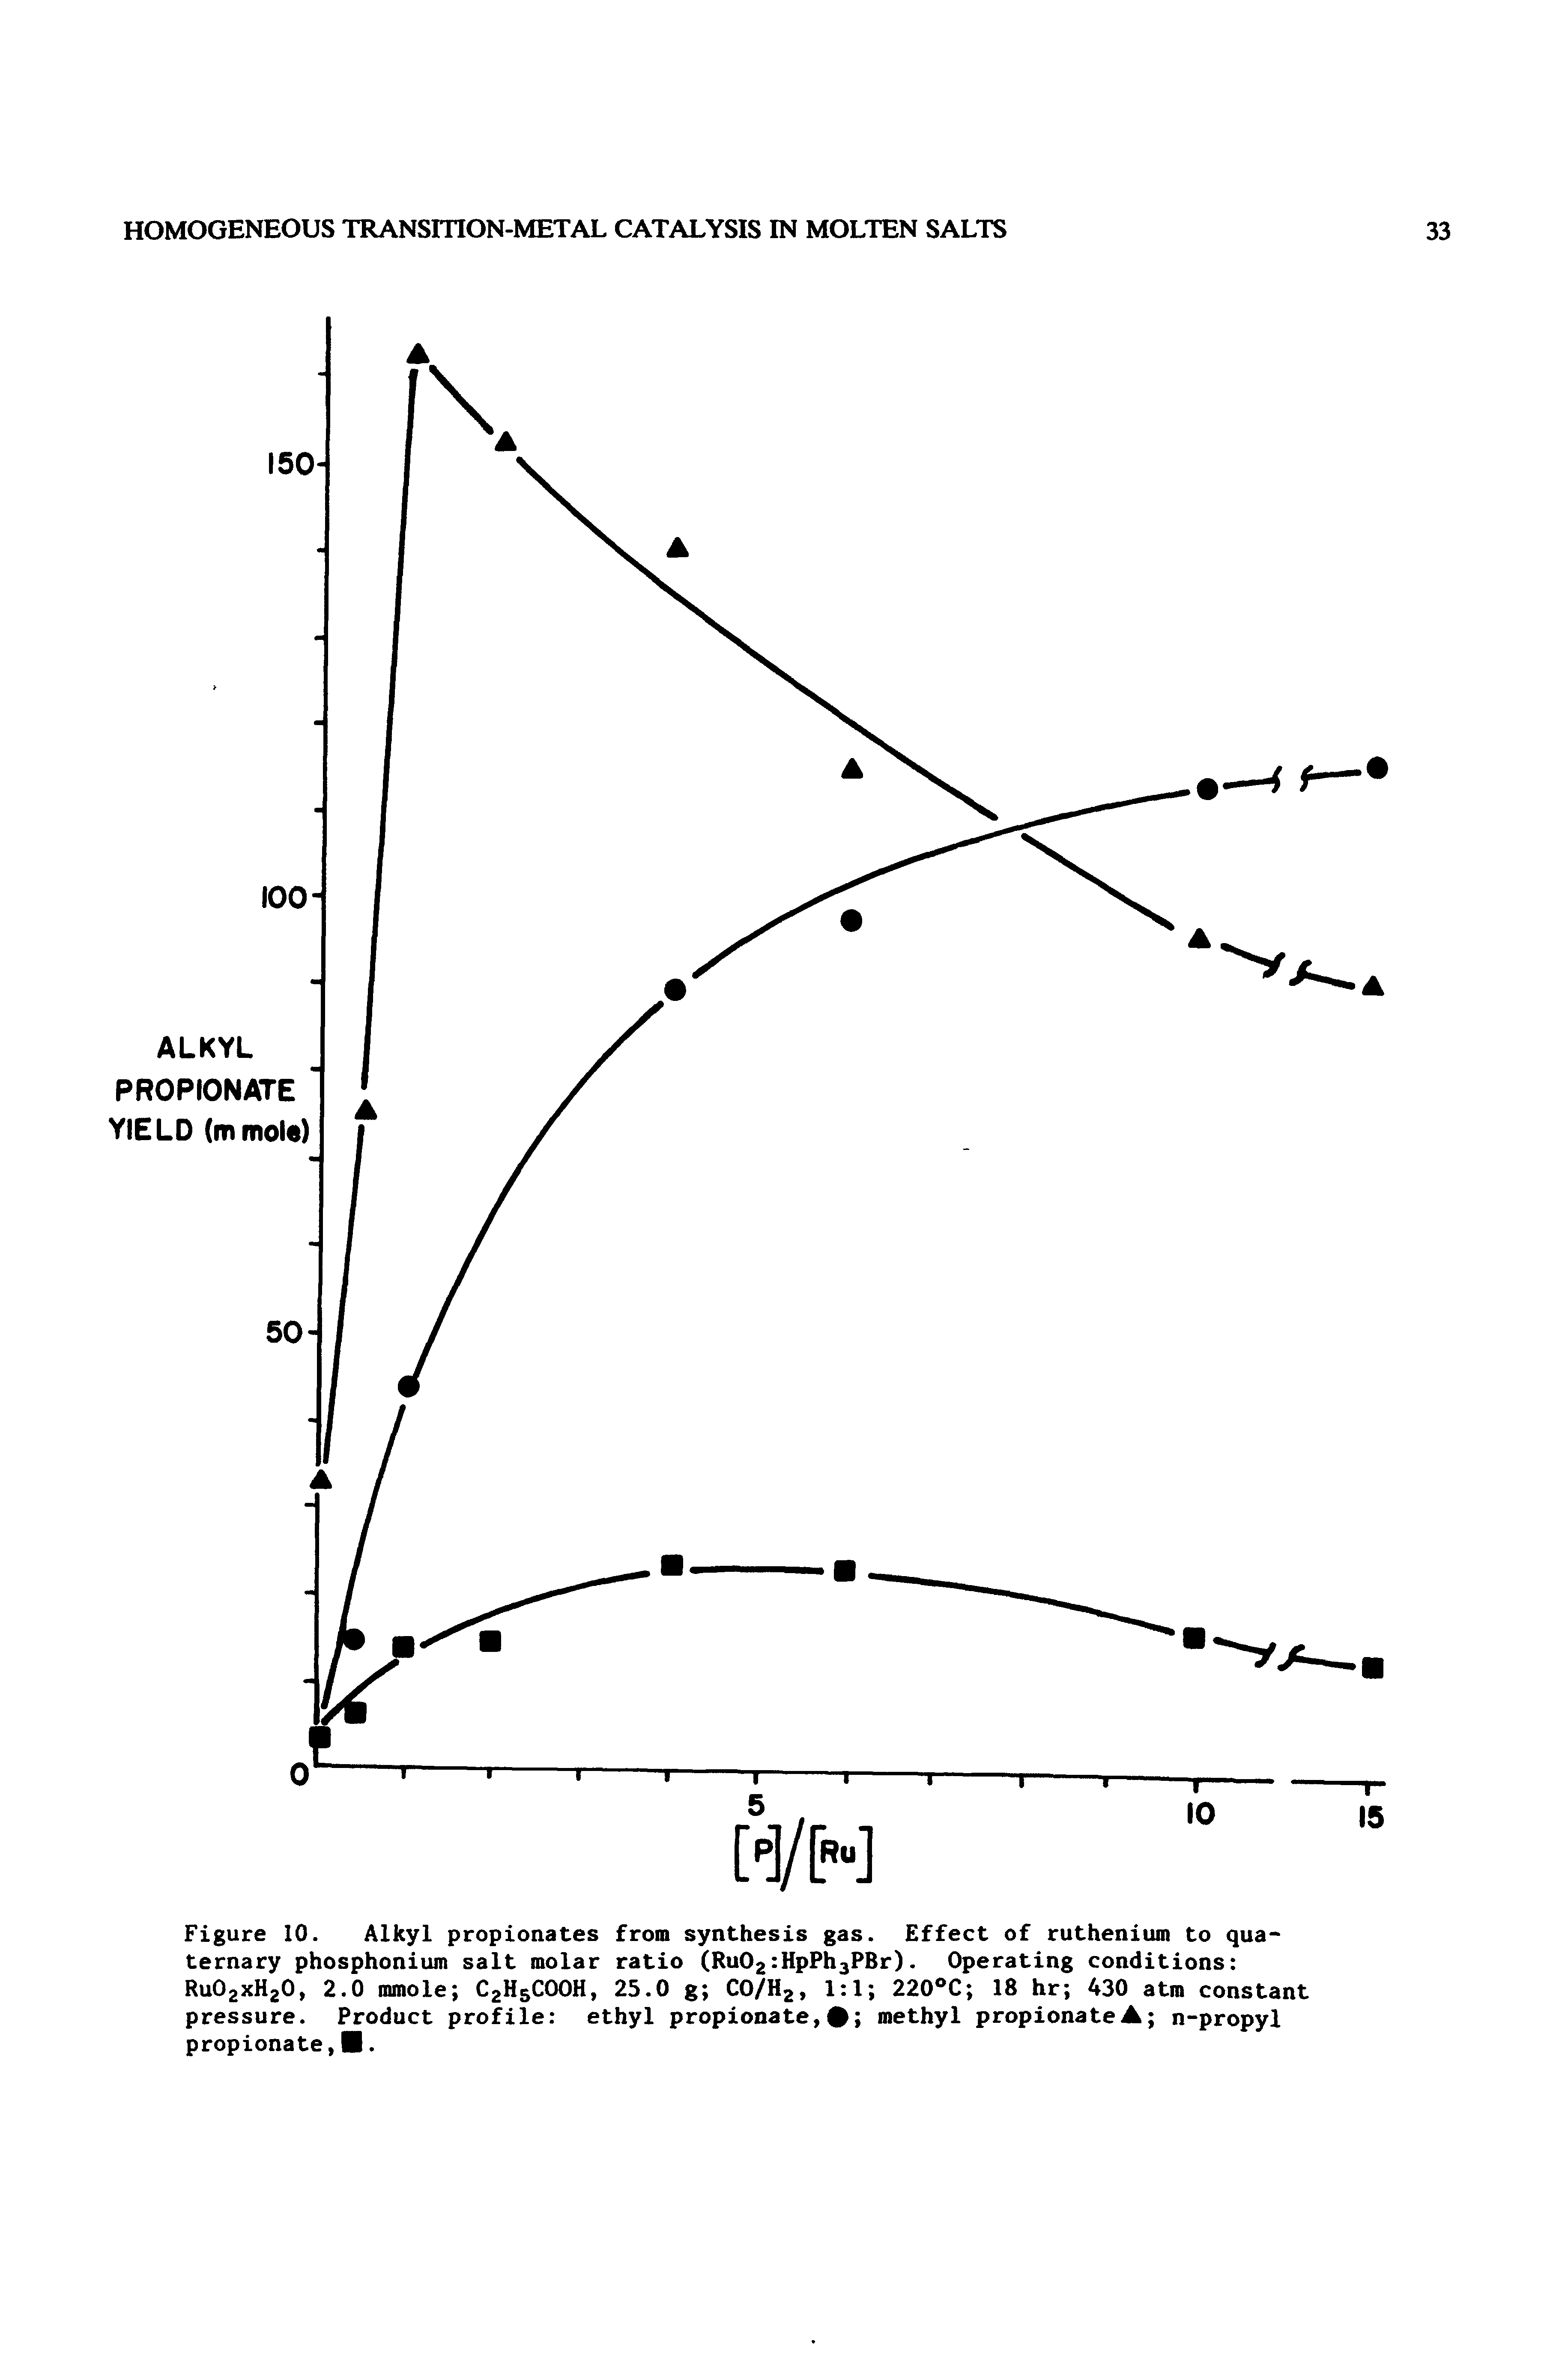 Figure 10. Alkyl propionates from synthesis gas. Effect of ruthenium to quaternary phosphonium salt molar ratio (RUO2 HpPh3PBr). Operating conditions RuOjxHgO, 2.0 mmole C2H5COOH, 25.0 g CO/Hj, 1 1 220 C 18 hr 430 atra constant pressure. Product profile ethyl propionate, methyl propionate A n-propyl propionate, .